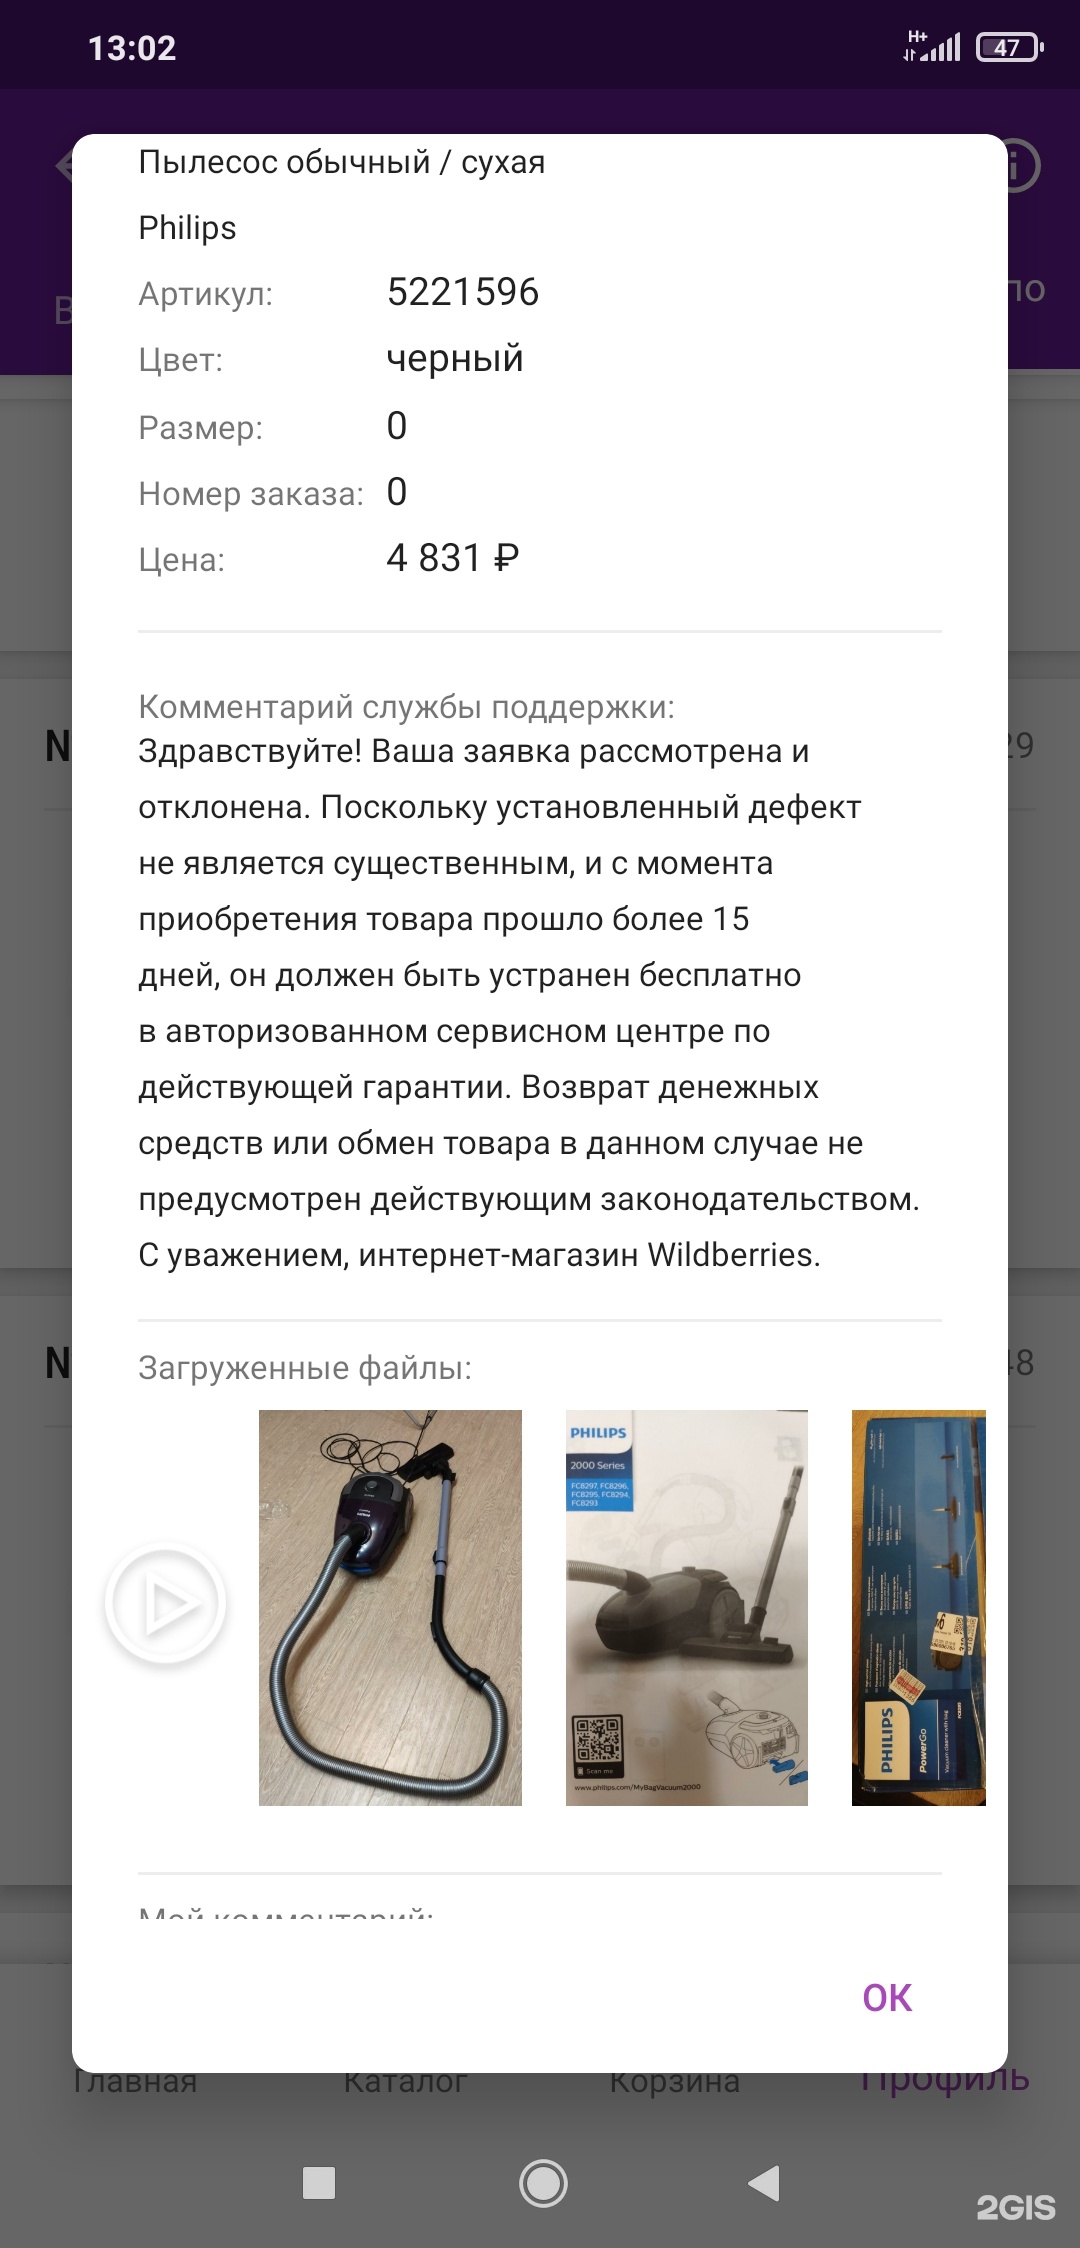 Walberes Интернет Магазин Пермь